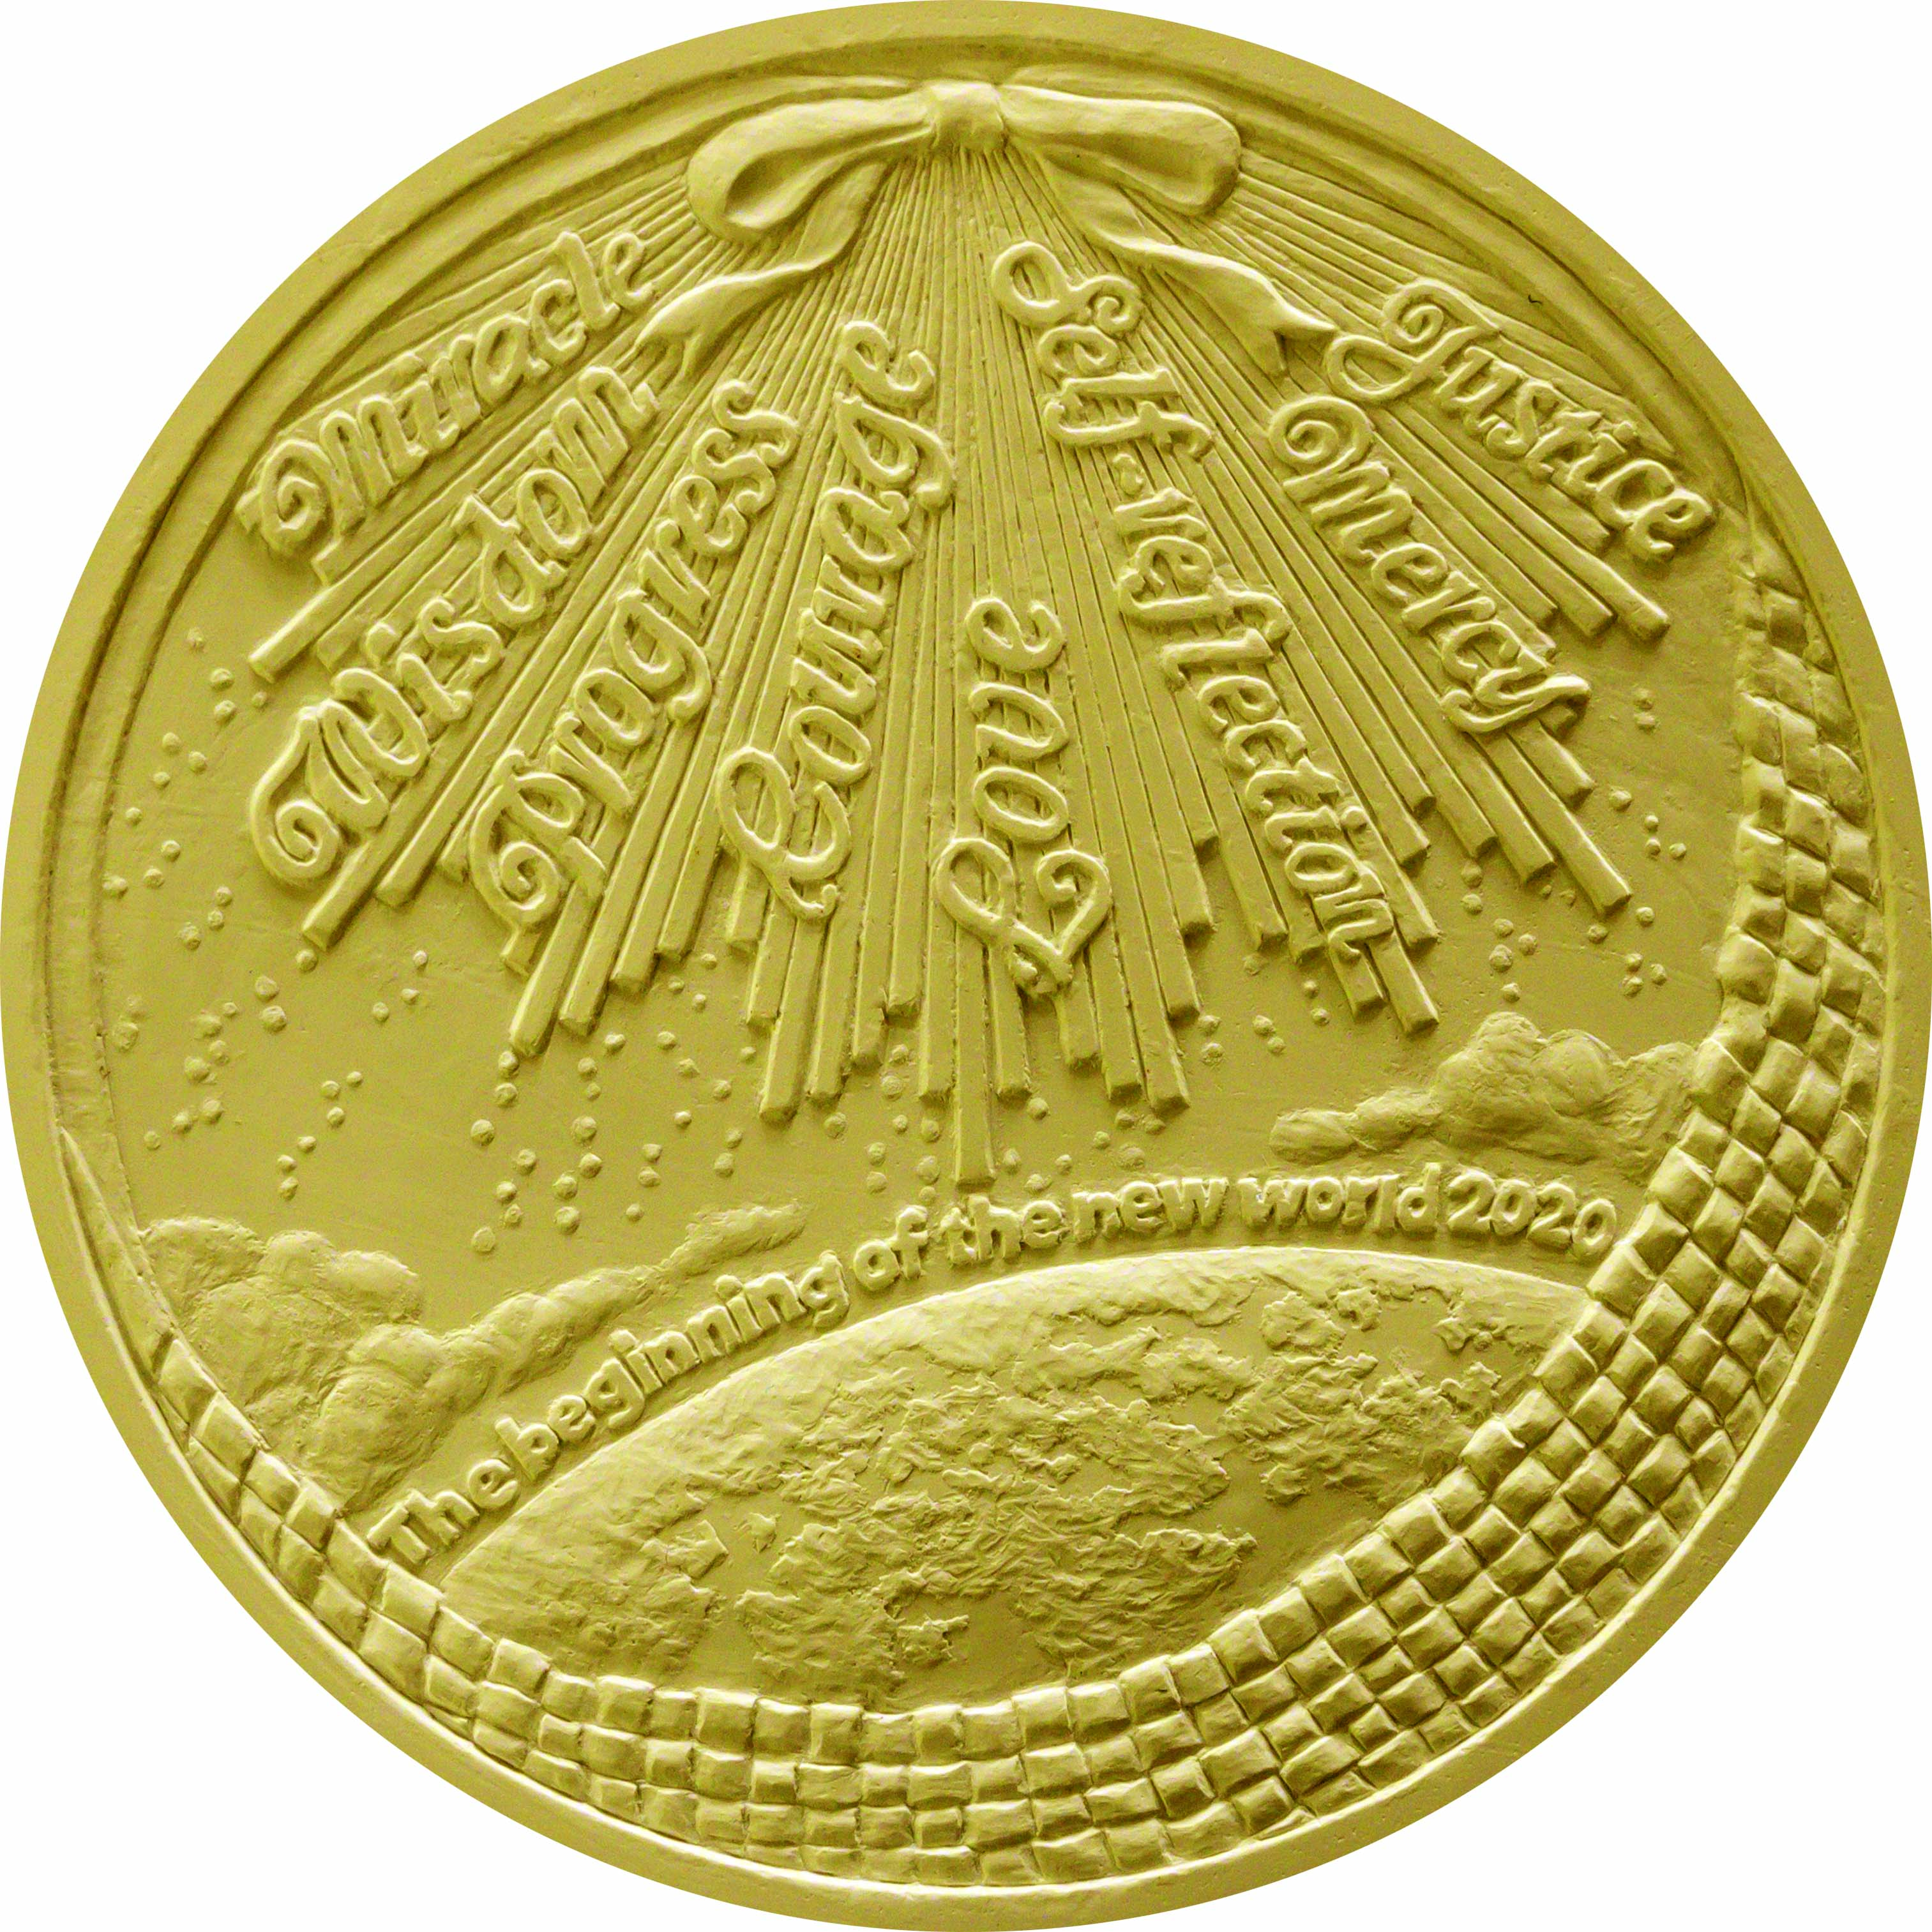 ICDC2020メダル（金メダル）裏面の画像